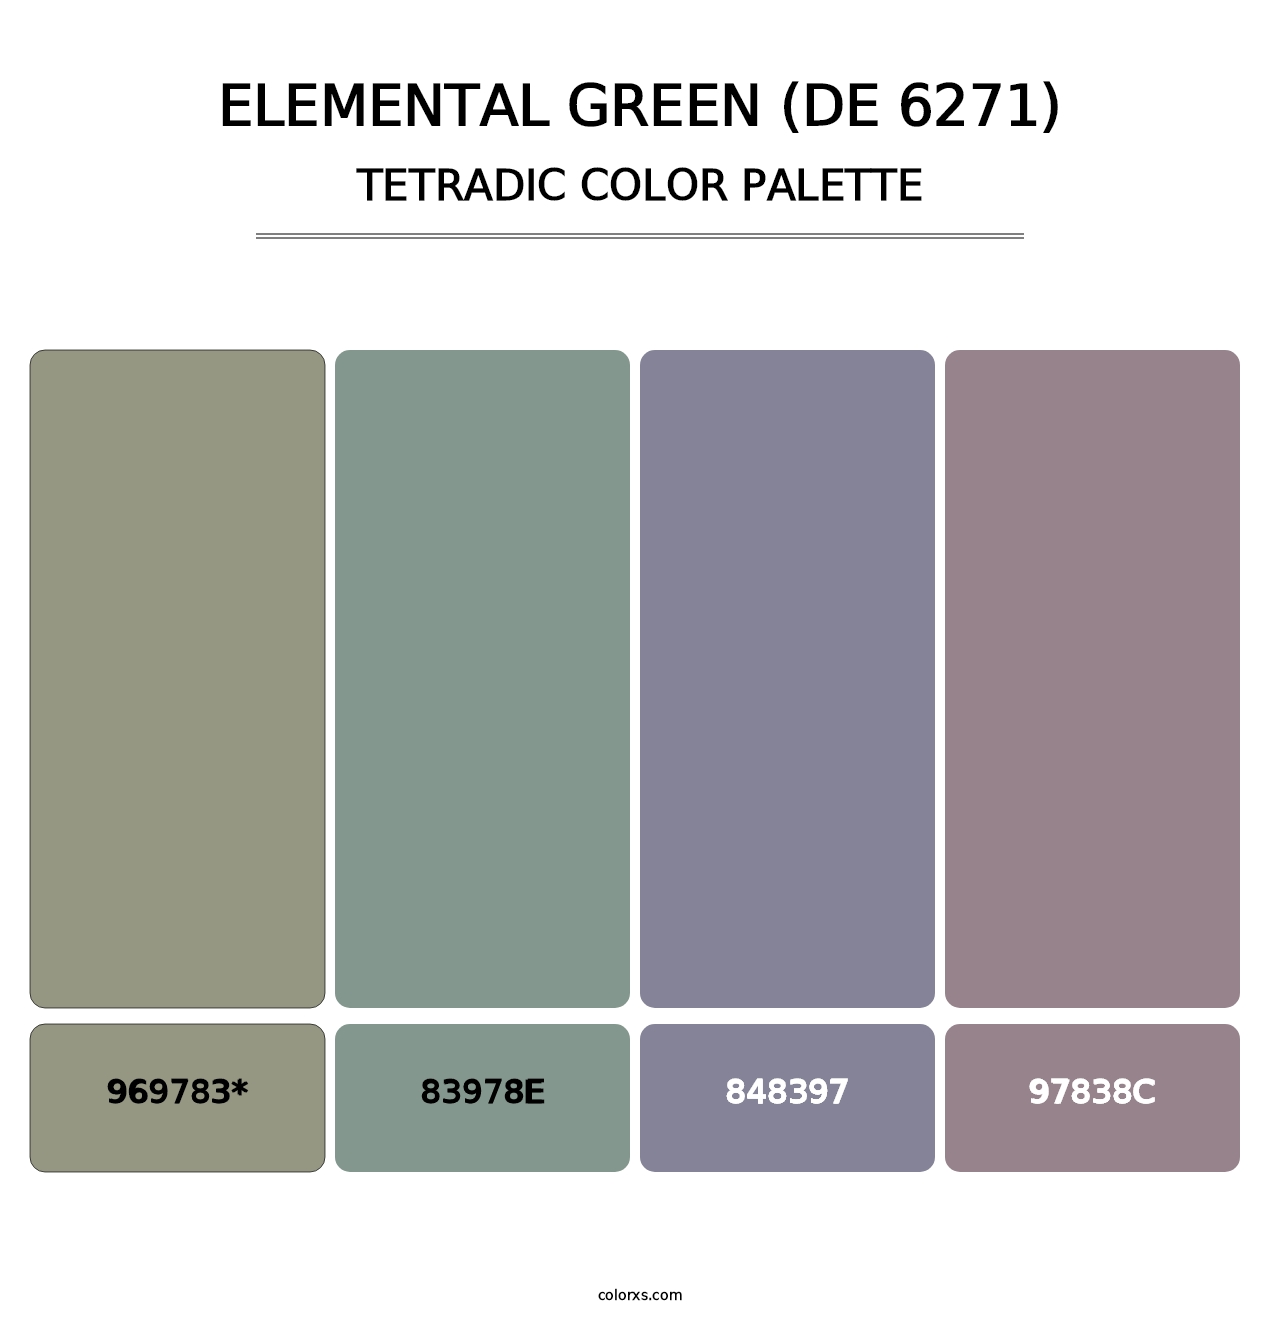 Elemental Green (DE 6271) - Tetradic Color Palette